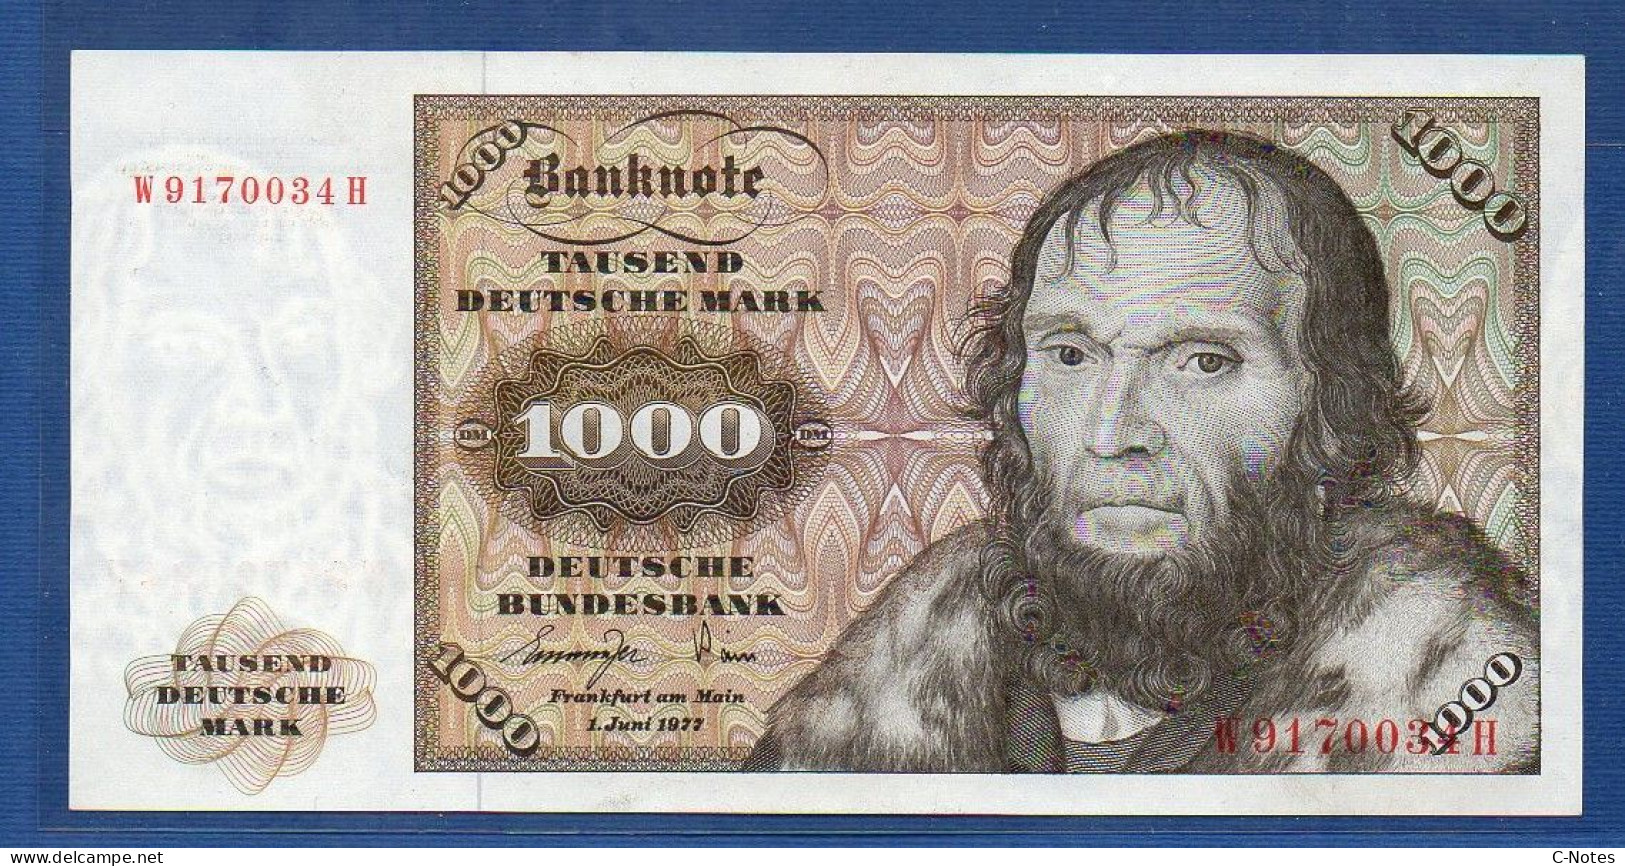 FEDERAL REPUBLIC OF GERMANY - P.36a – 1000 Deutsche Mark 1977 AUNC-, S/n W9170034H - 1.000 DM